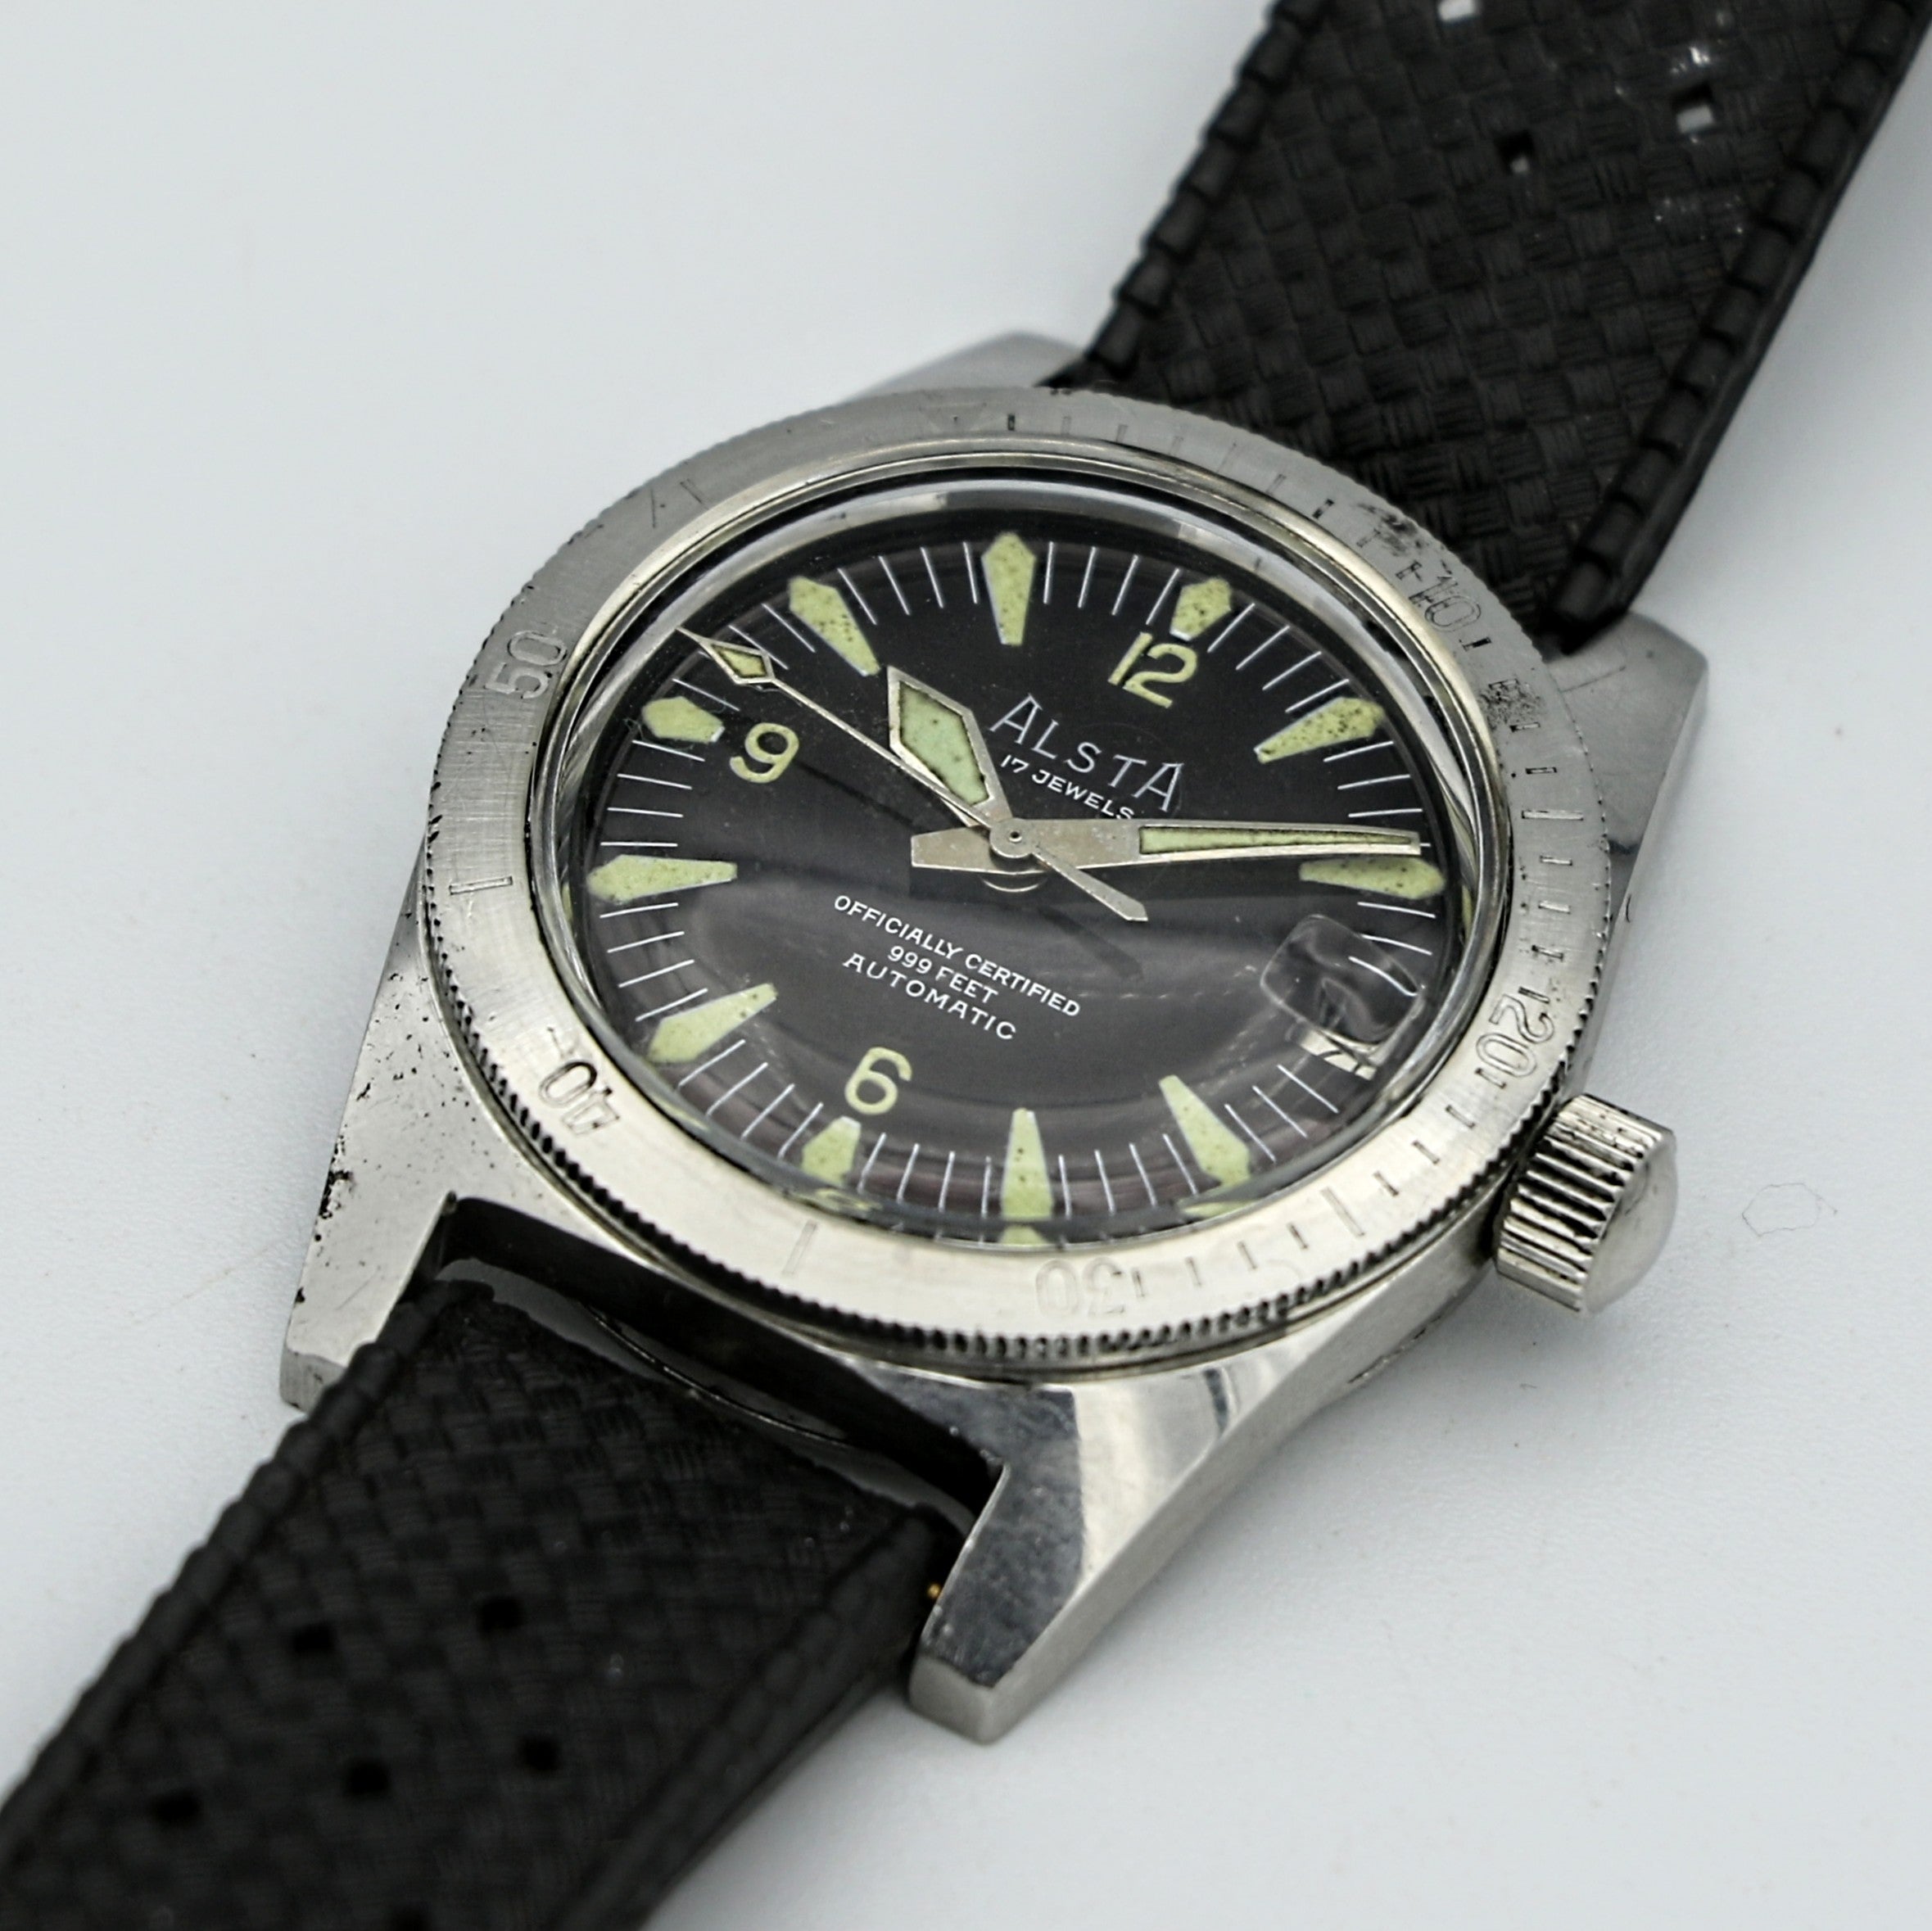 The Original "Jaws" Watch - ALSTA Nautoscaph Dive Automatic Wristwatch 999 Feet